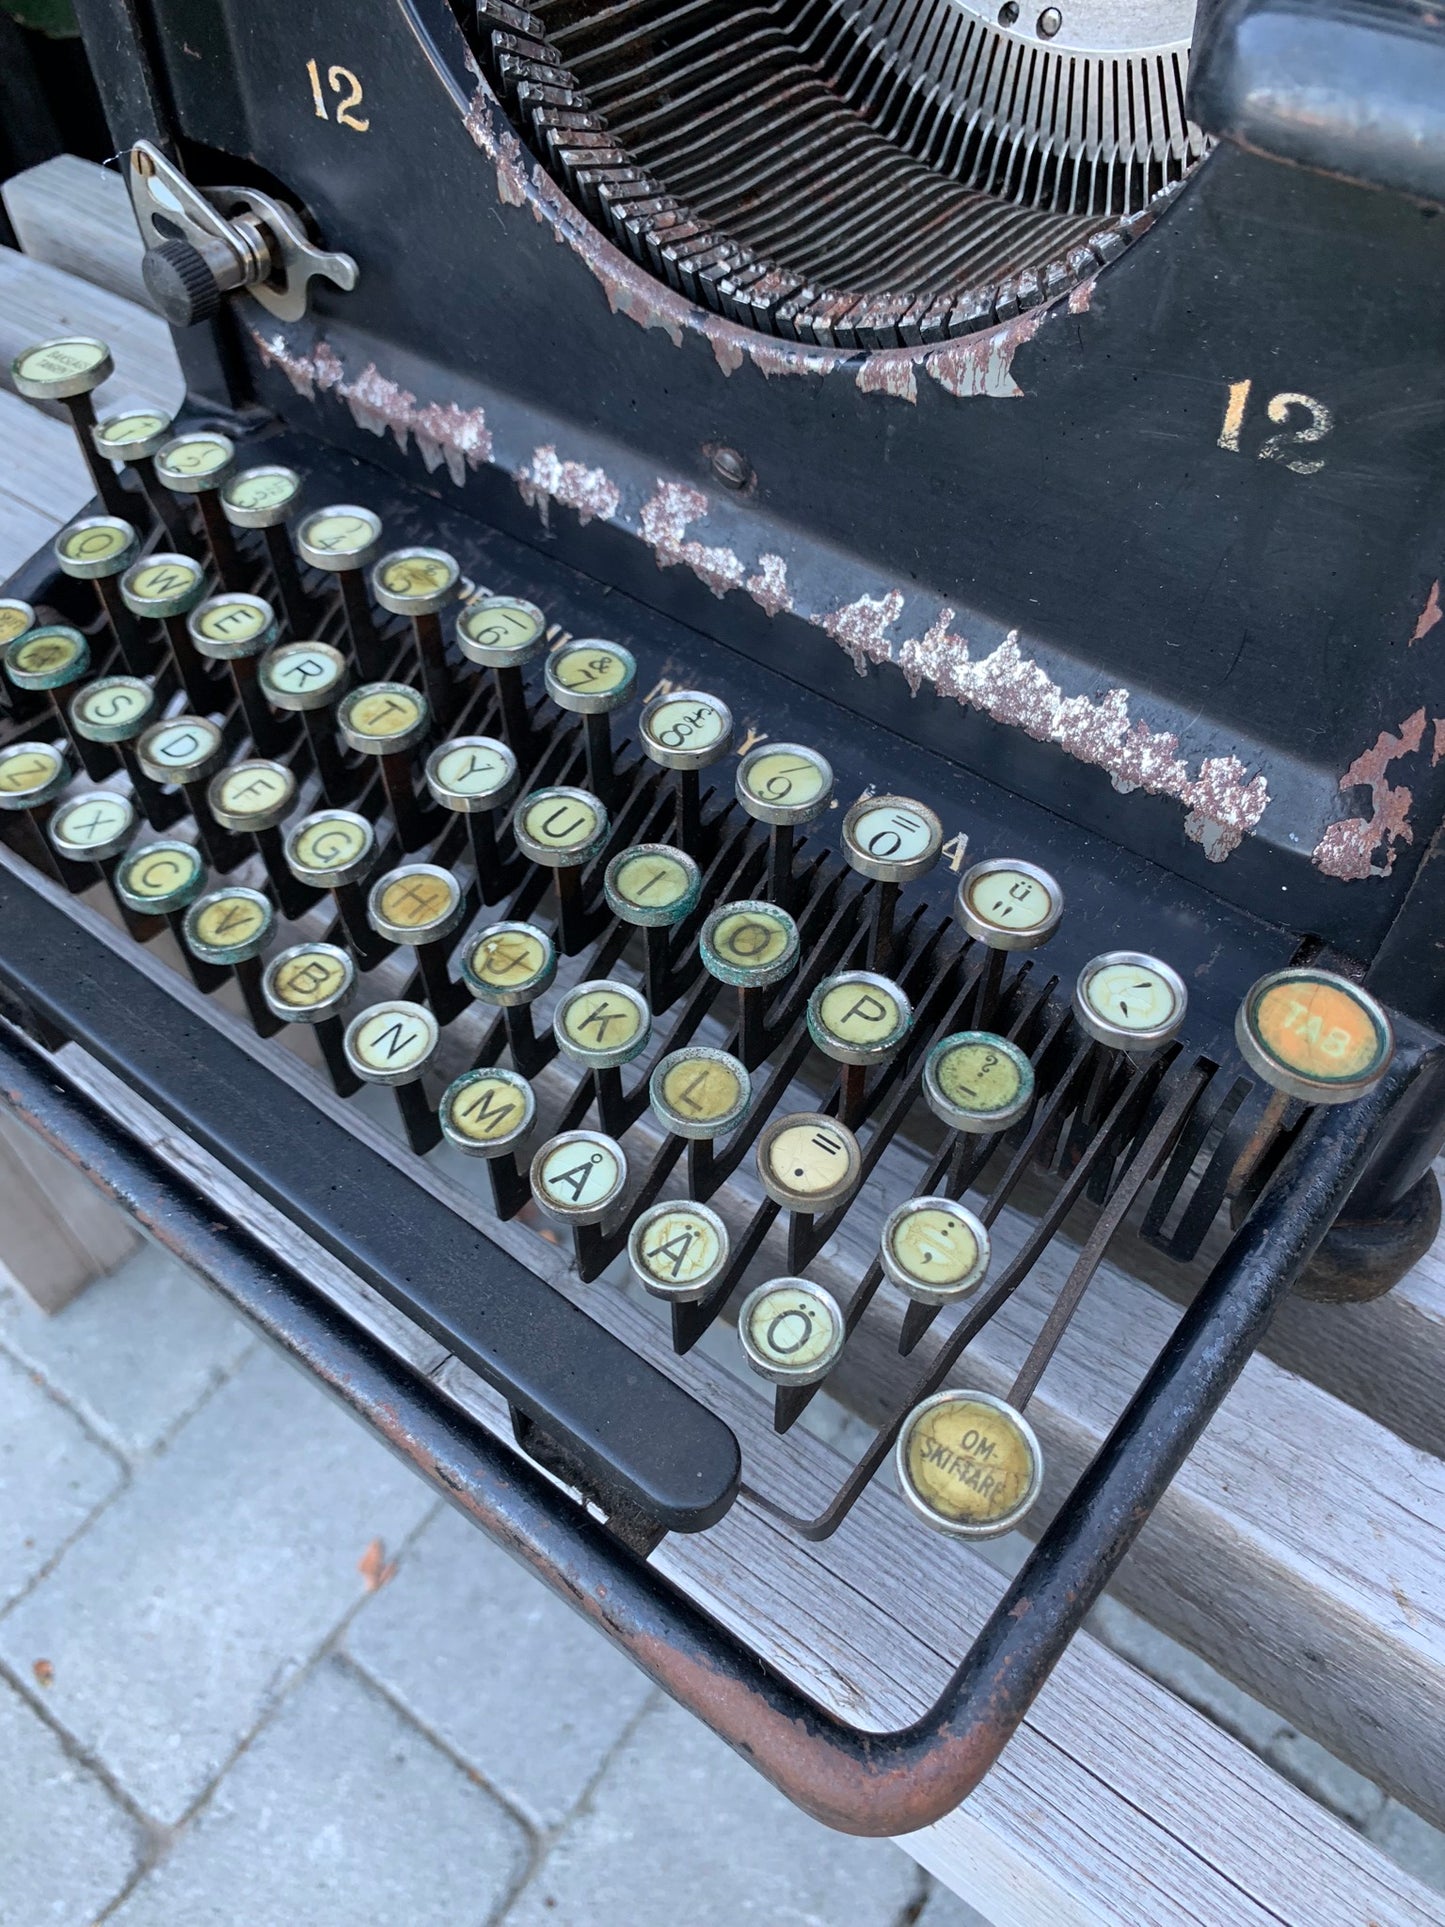 Remington skrivemaskine med skøn patina